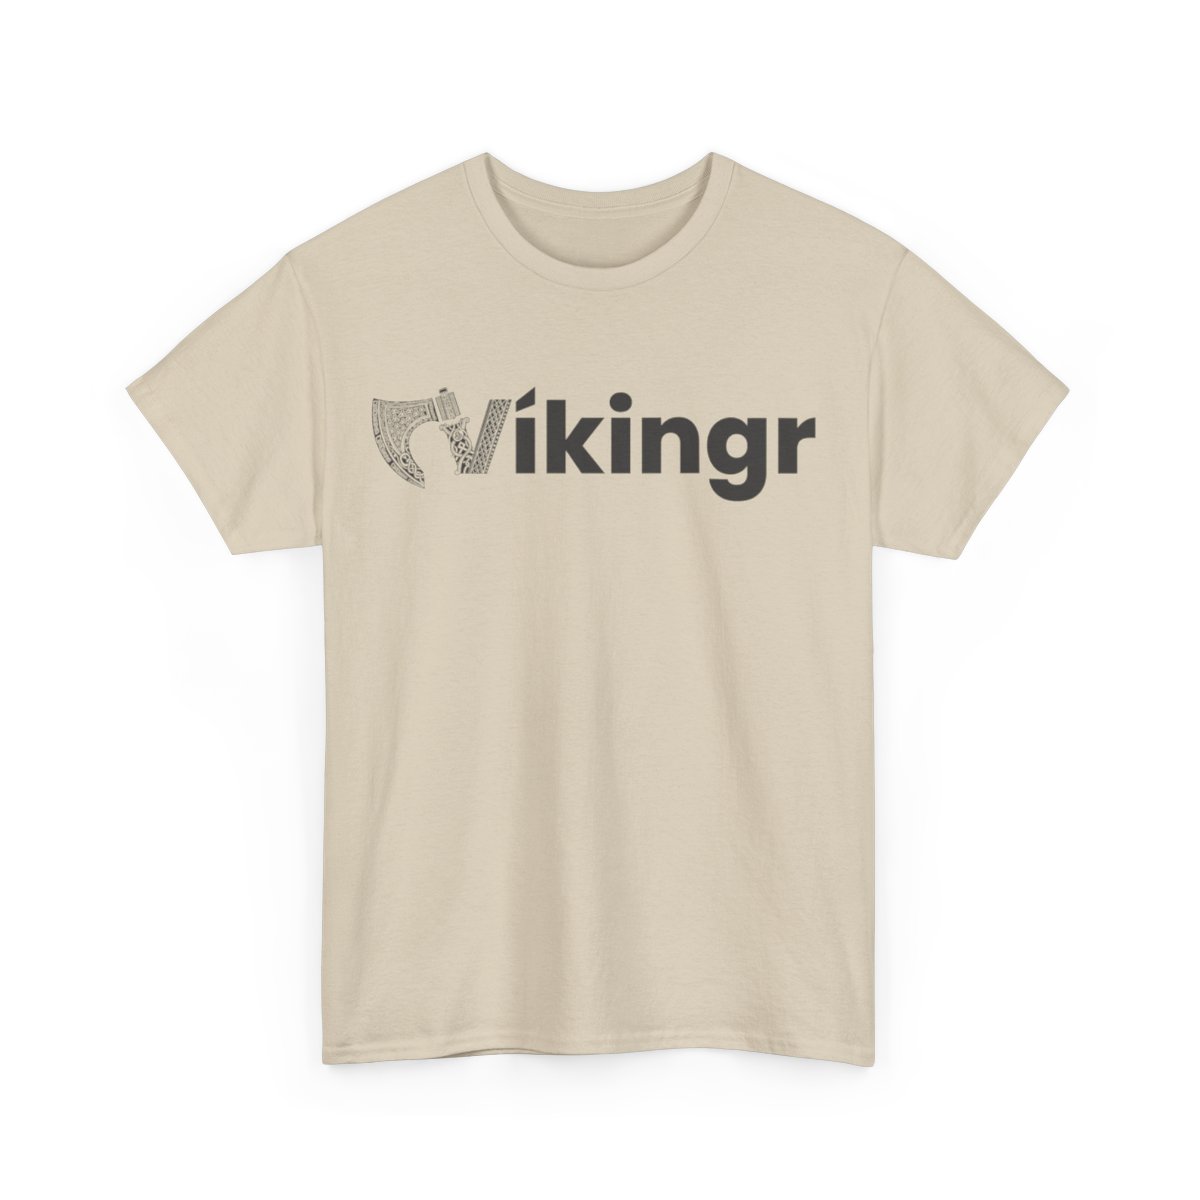 Víkingr Classic (Front) – Light Colors T-Shirt